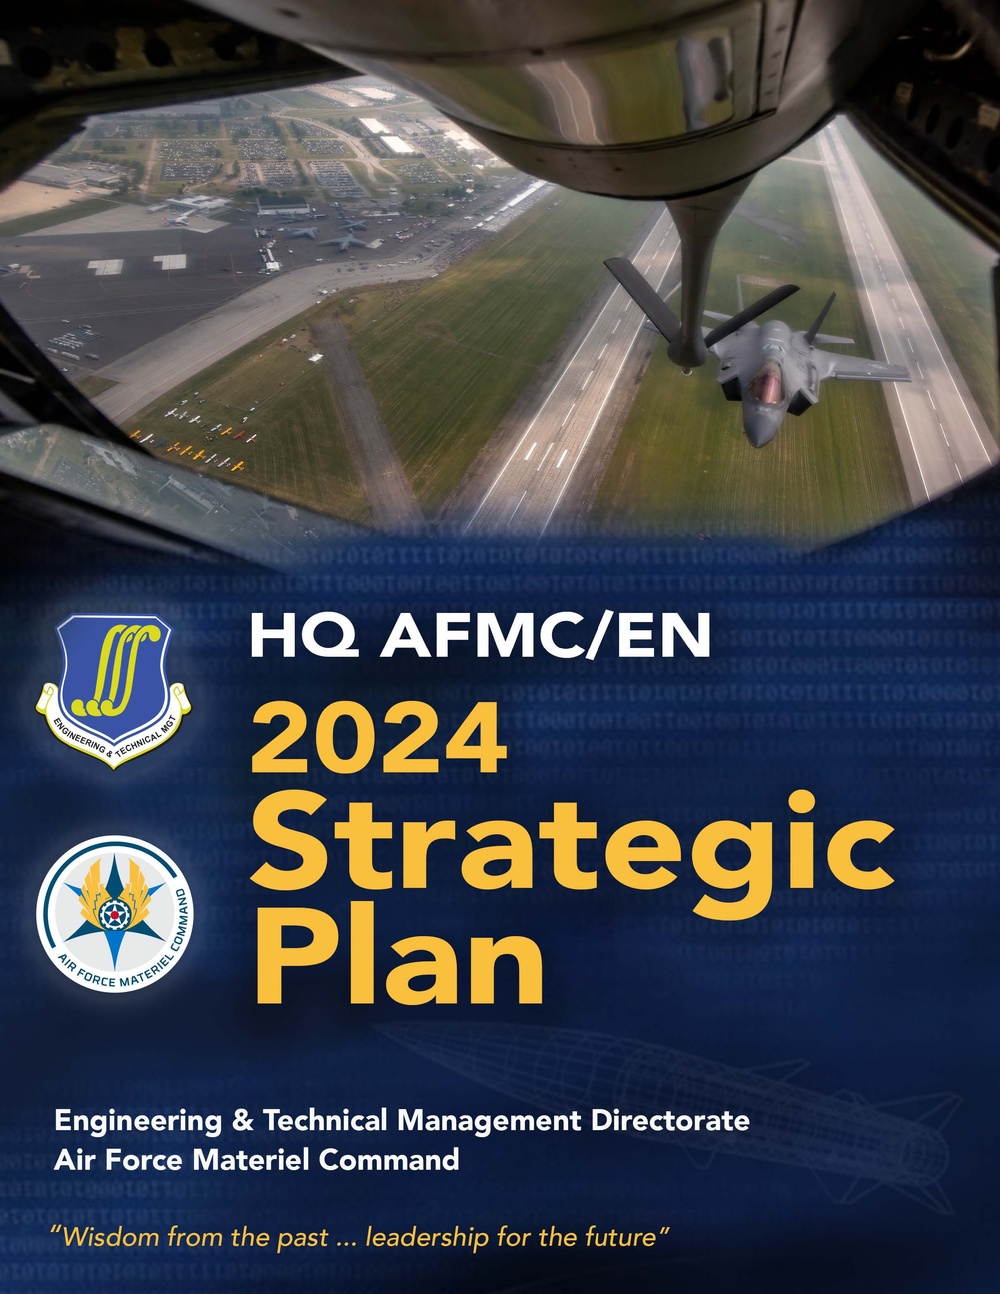 AFMC releases 2024 Engineering Strategic Plan